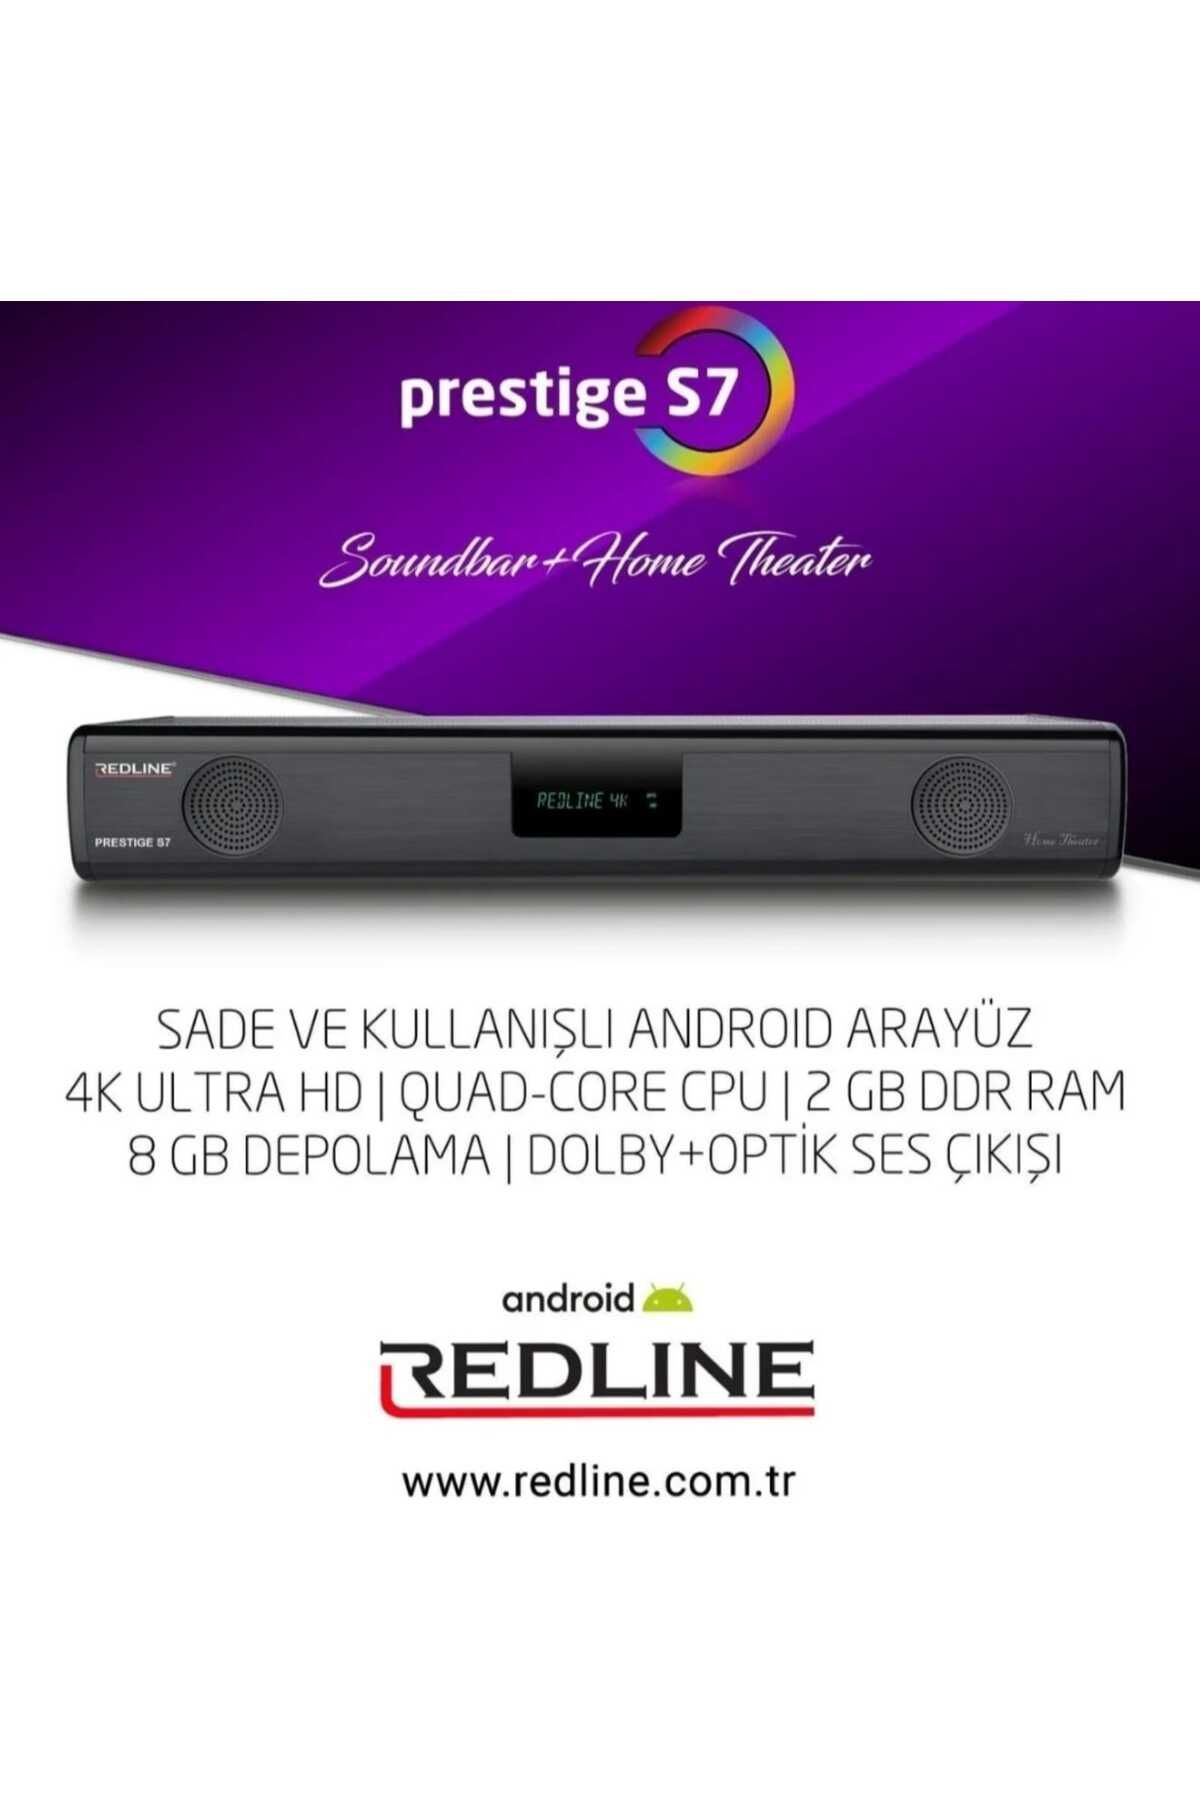 Redline Prestige S7 Android + Soundbar + Uydu Alıcı 4k Android